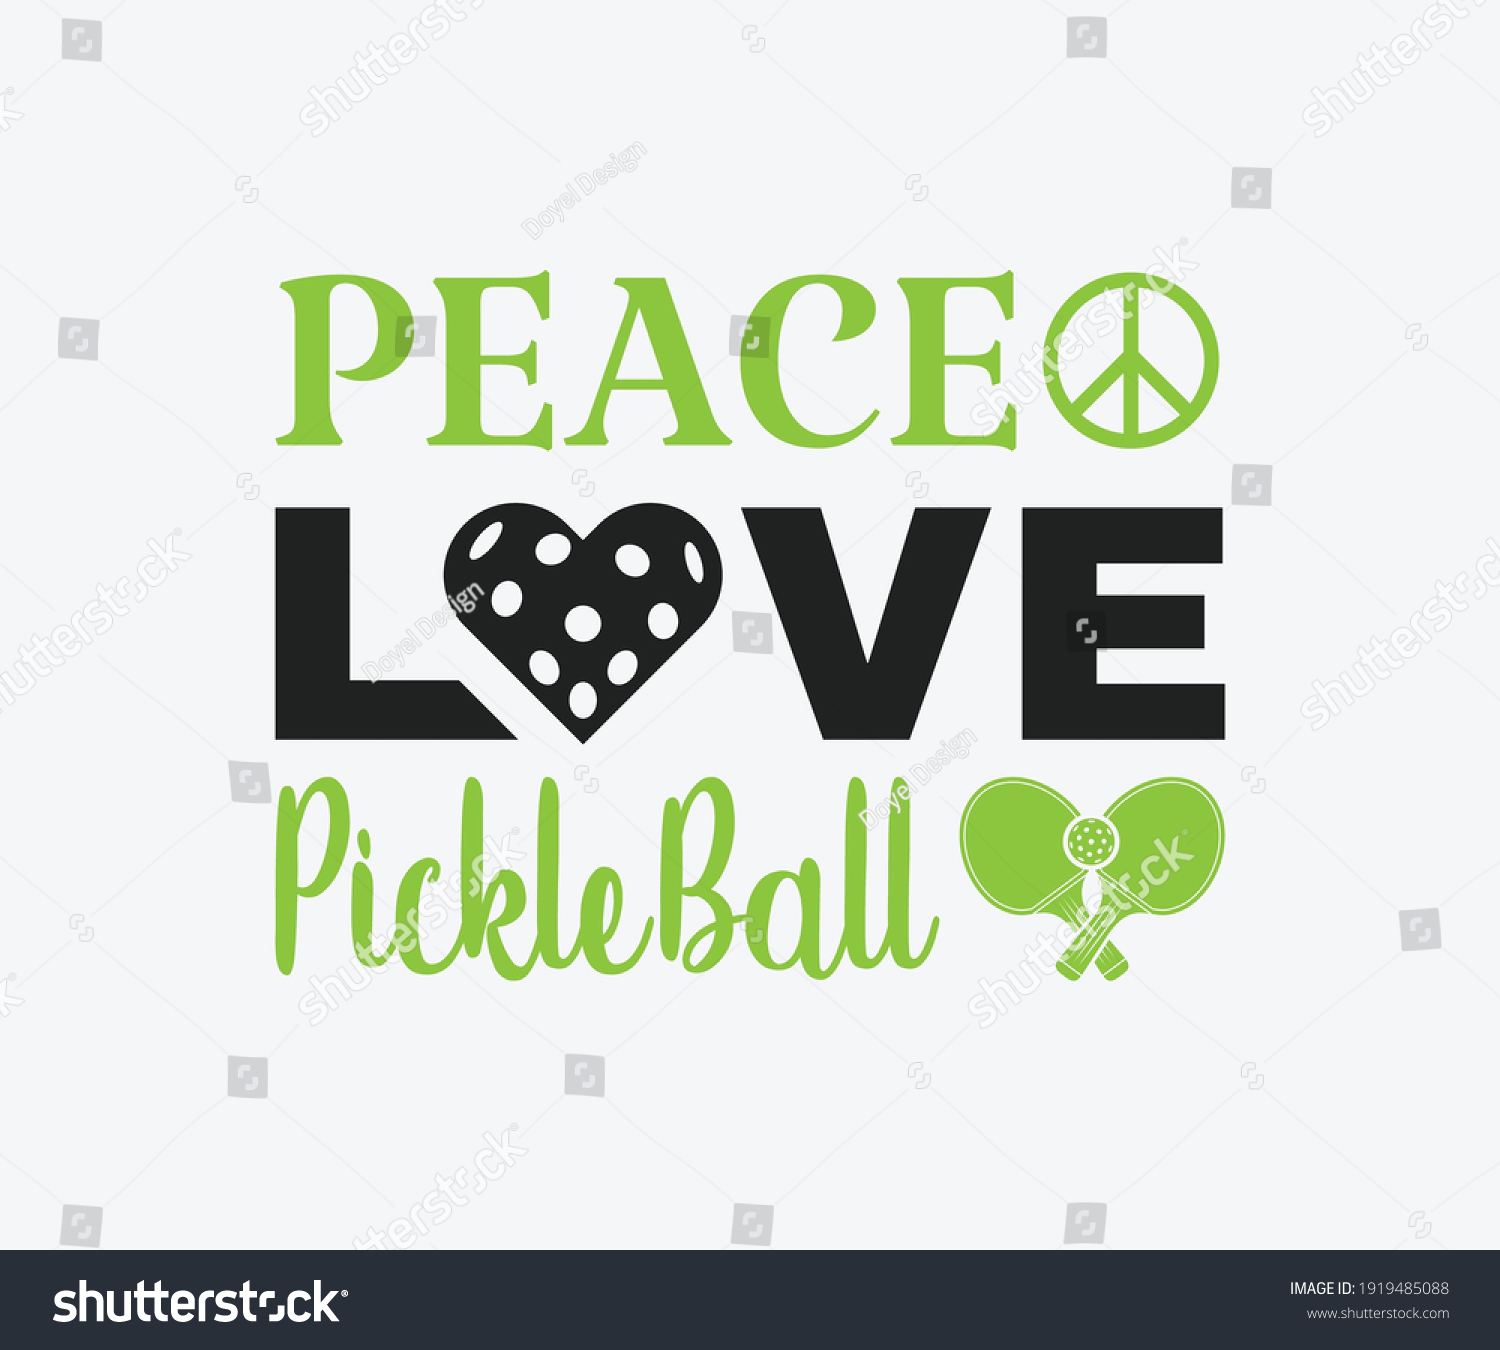 SVG of Peace love PickleBall, Printable Vector Illustration. Pickleball SVG. Great for badge t-shirt and postcard designs. Vector graphic illustration. svg